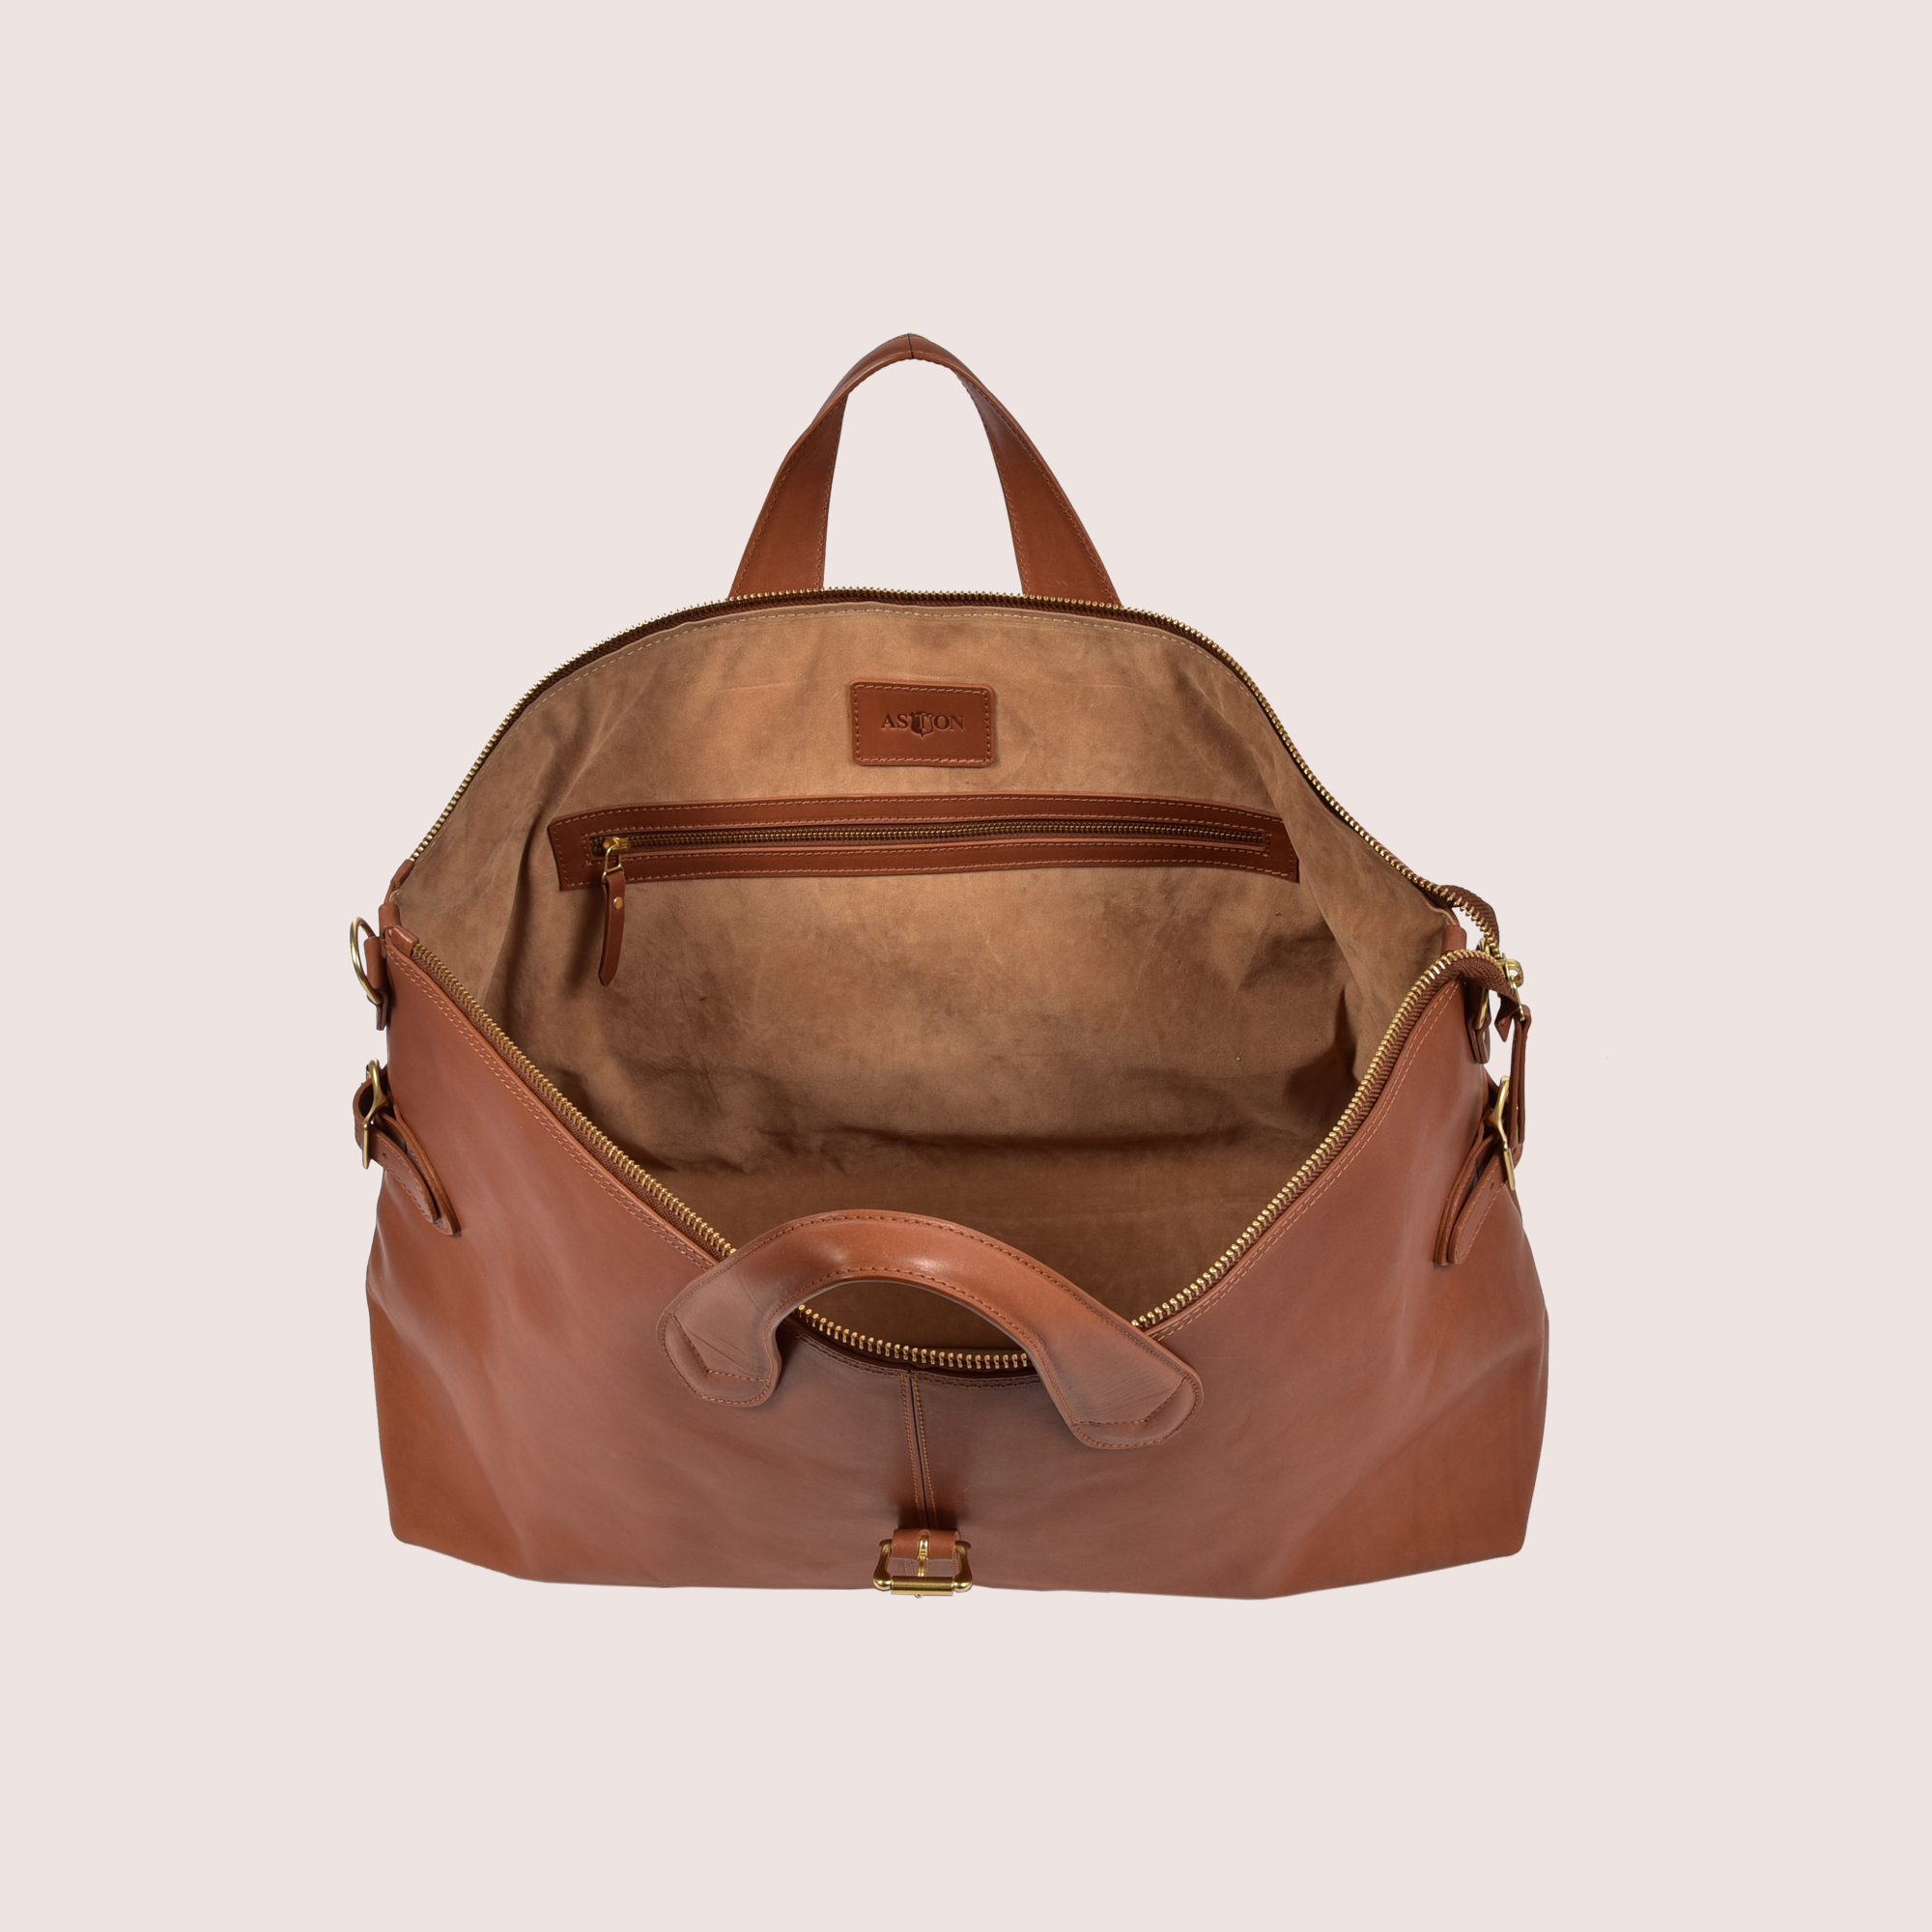 Emerson Travel Bag